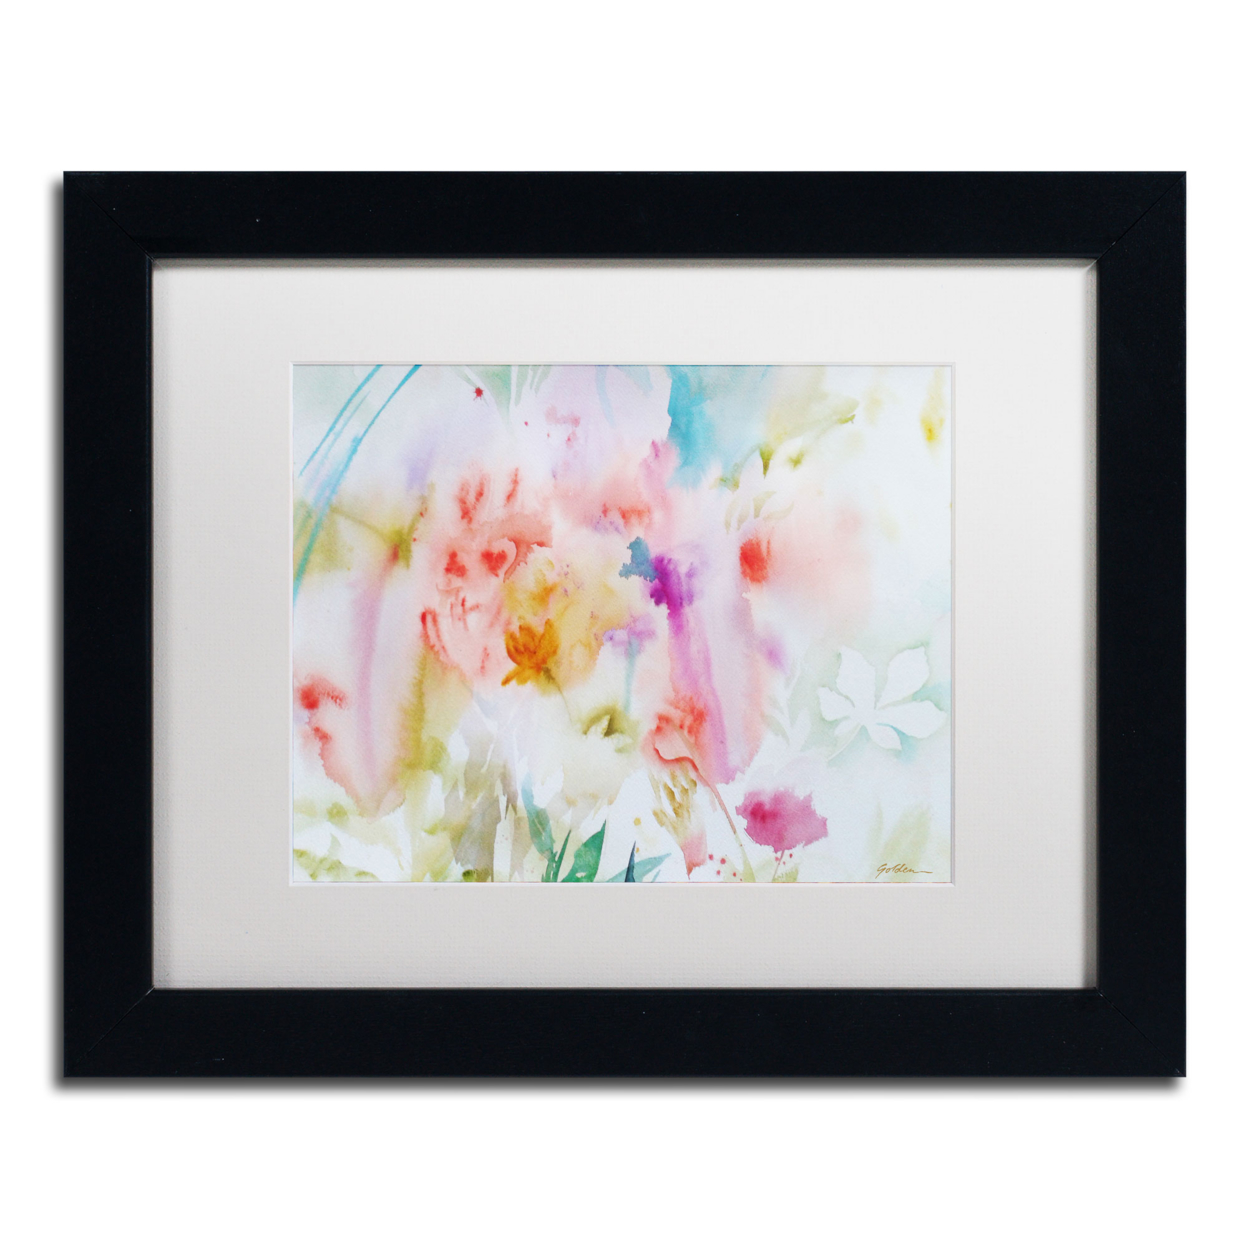 Sheila Golden 'Flower Dreams' Black Wooden Framed Art 18 X 22 Inches